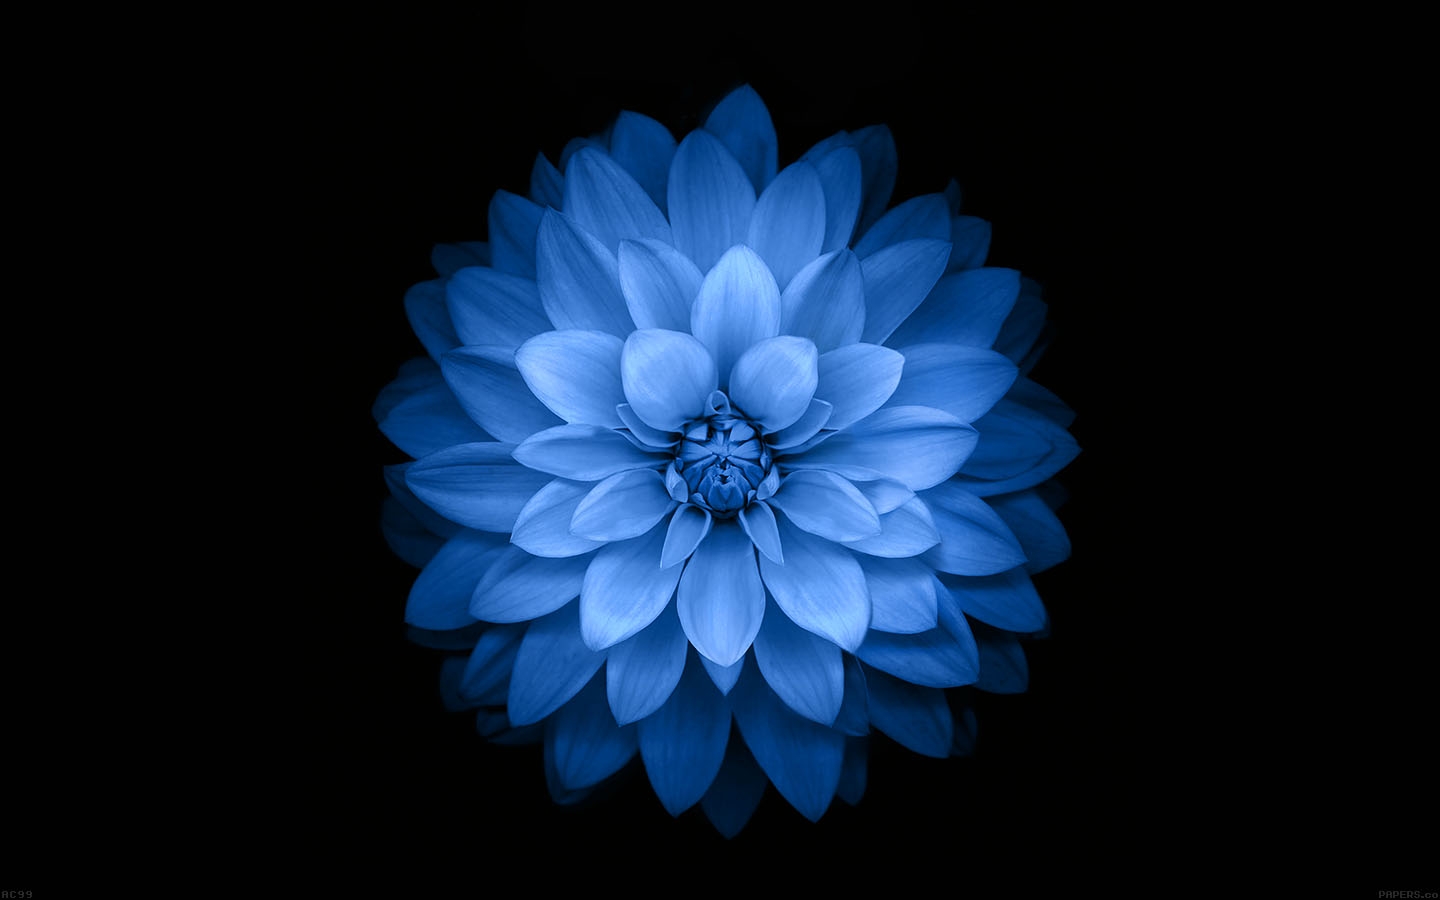 Apple iPhone Blue Lotus Flower Wallpaper HD Widescreen Background